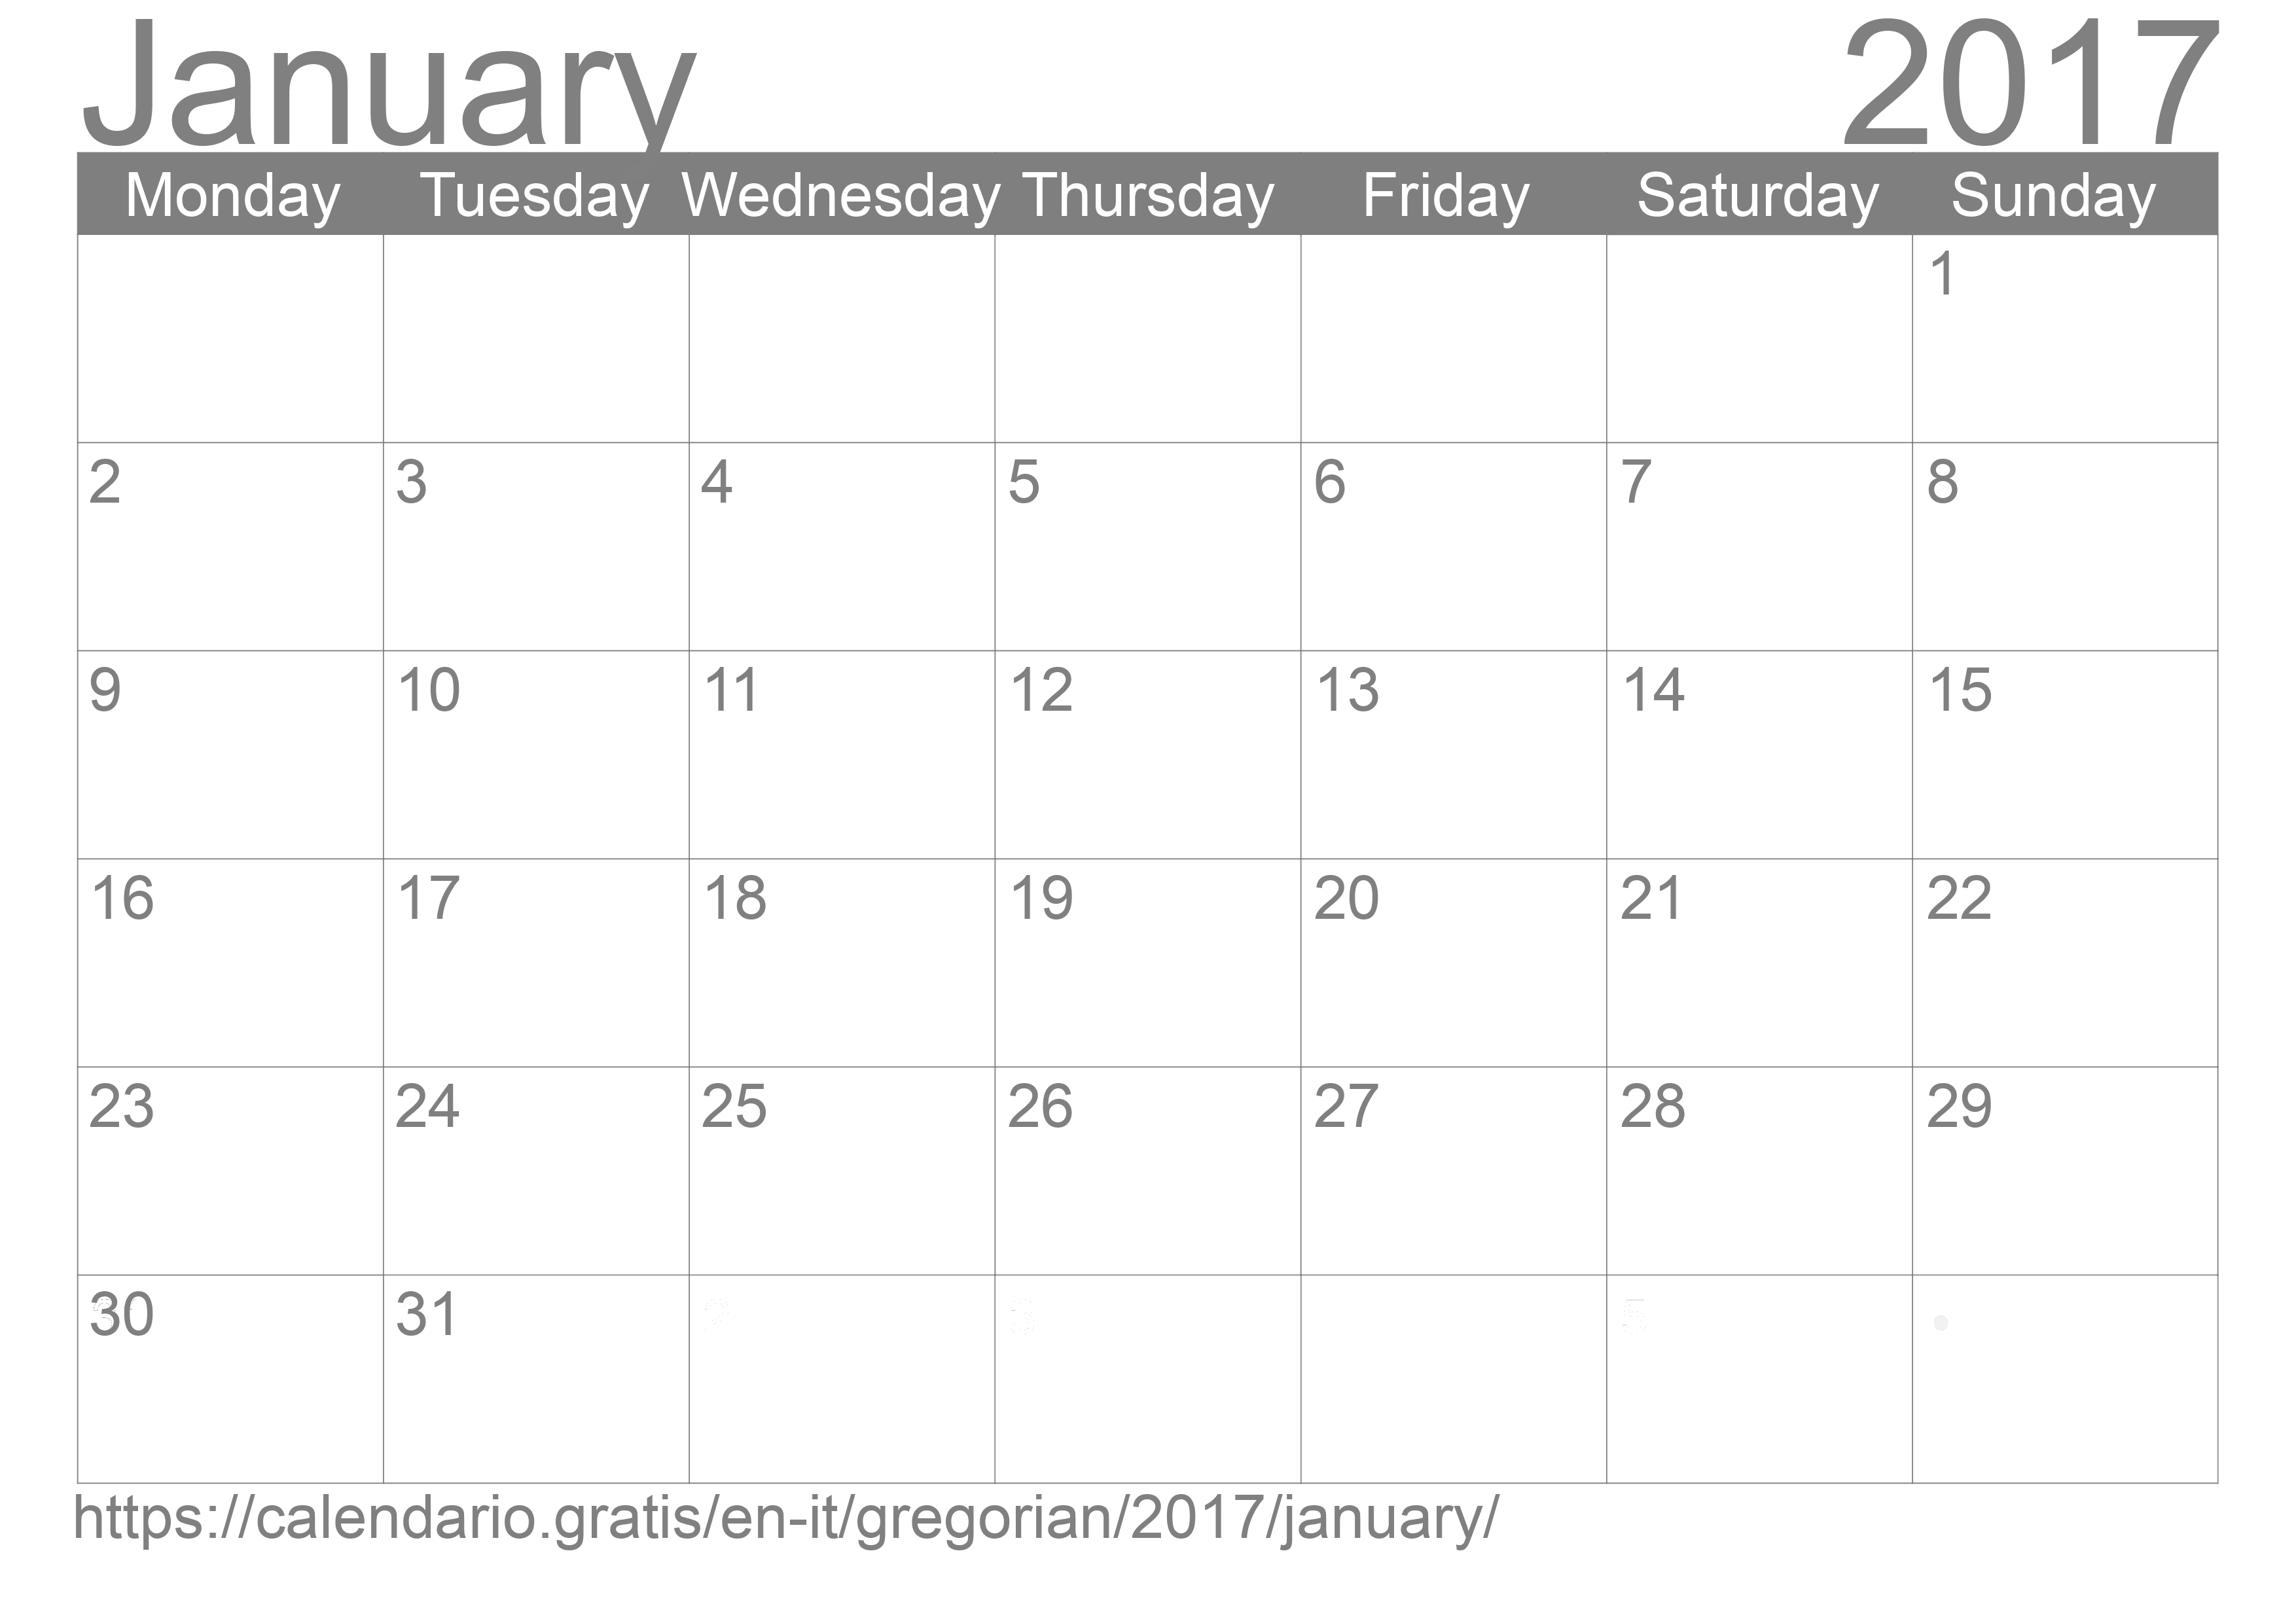 Calendar January 2017 to print